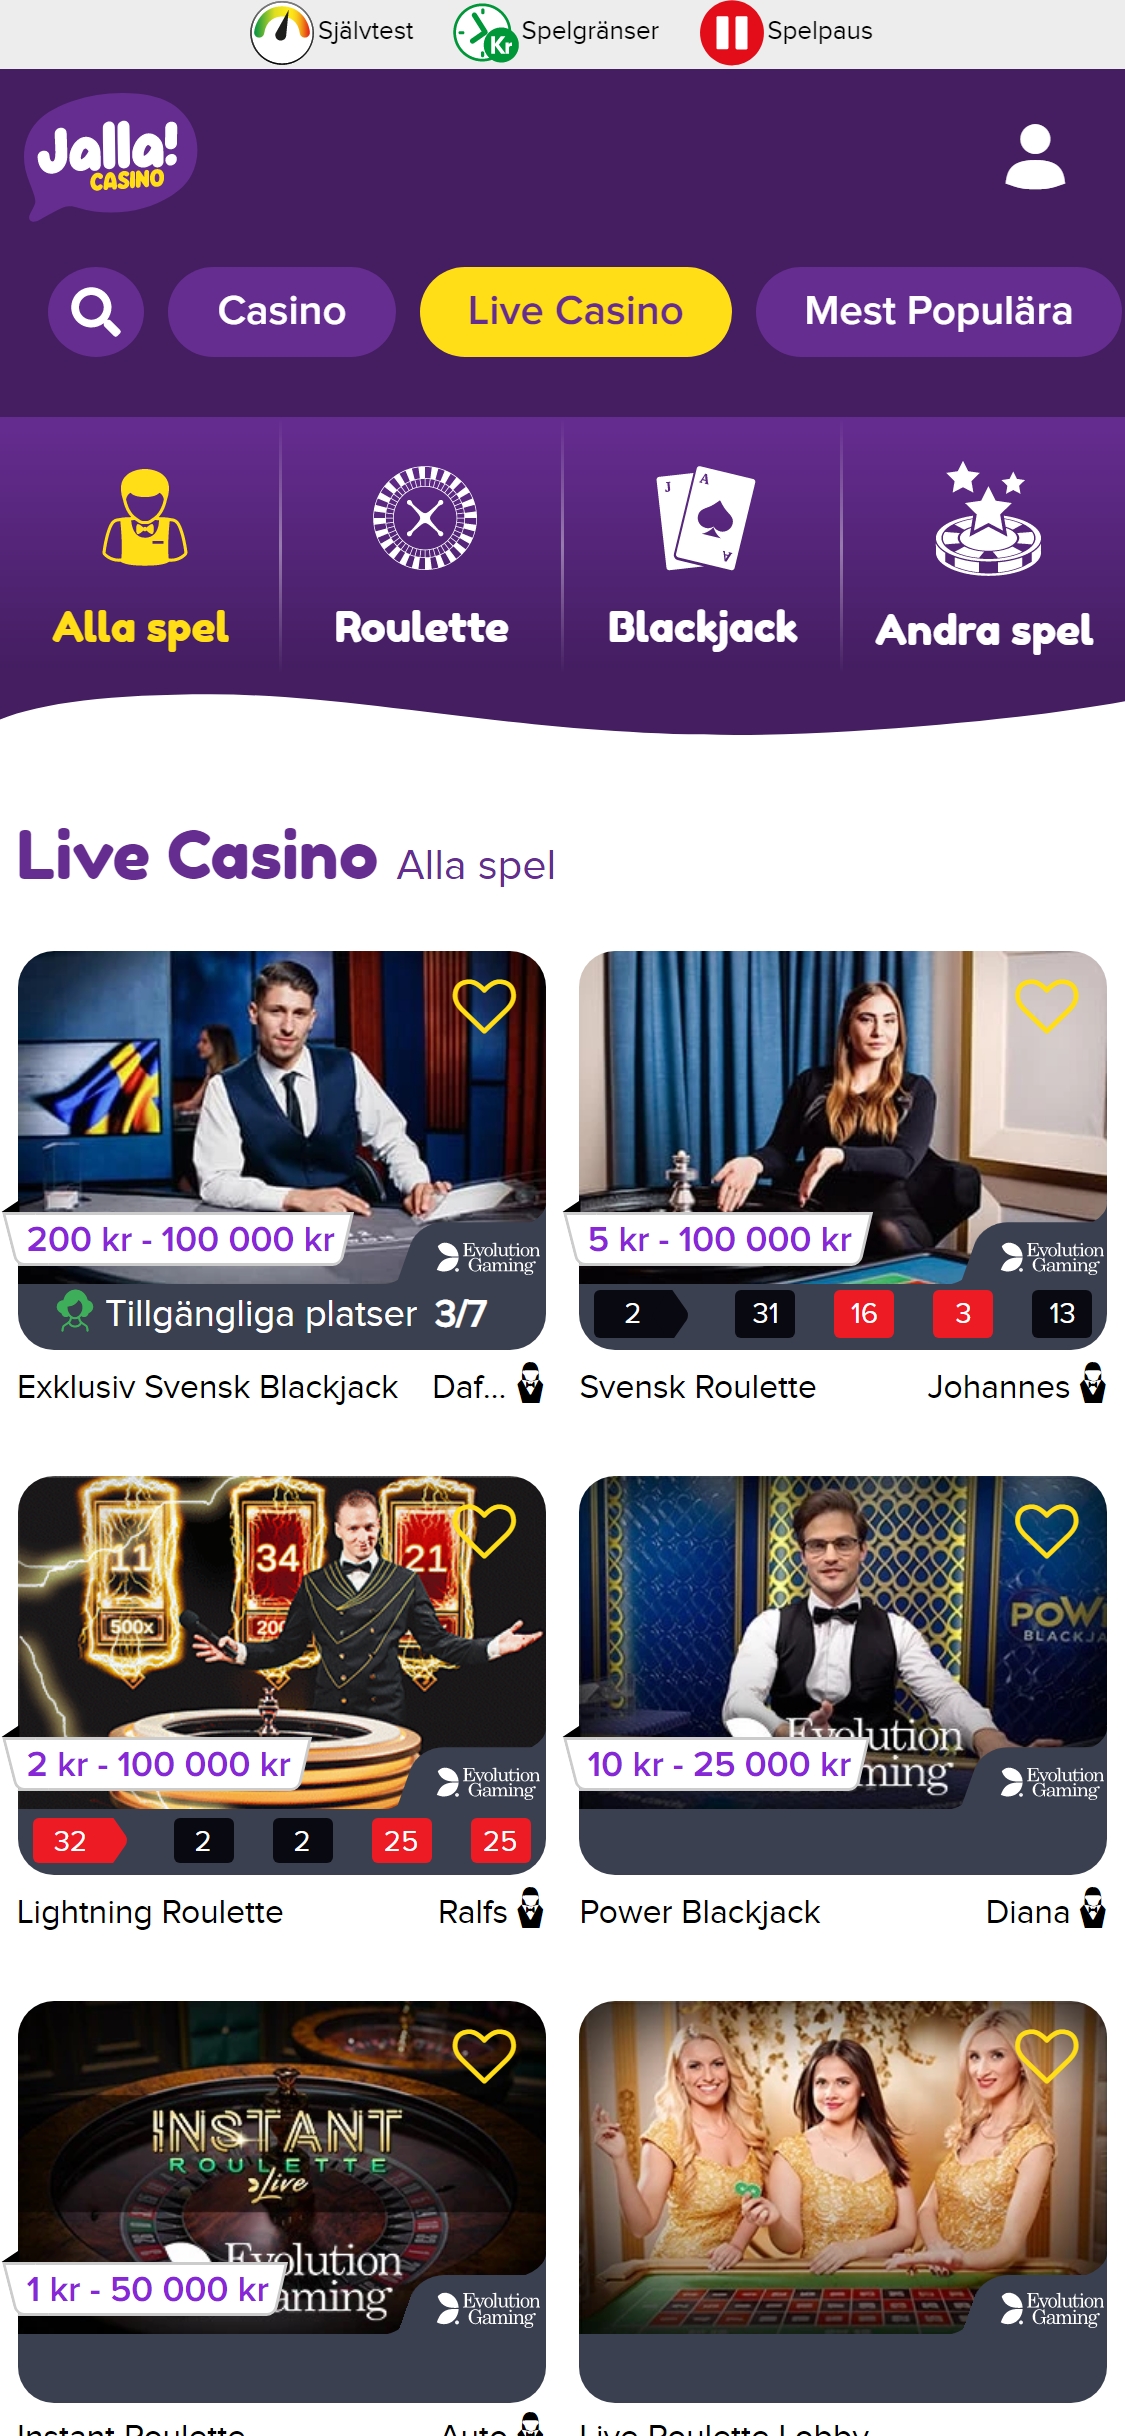 Jalla Casino Mobile Live Dealer Games Review